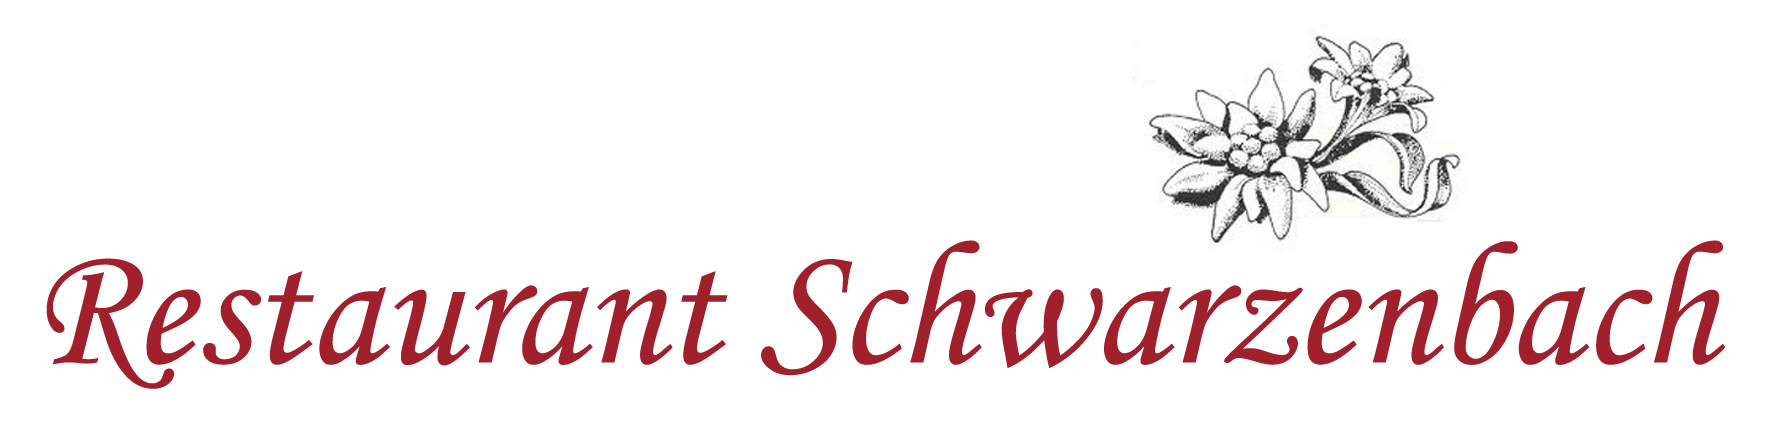 Restaurant Schwarzenbach Logo